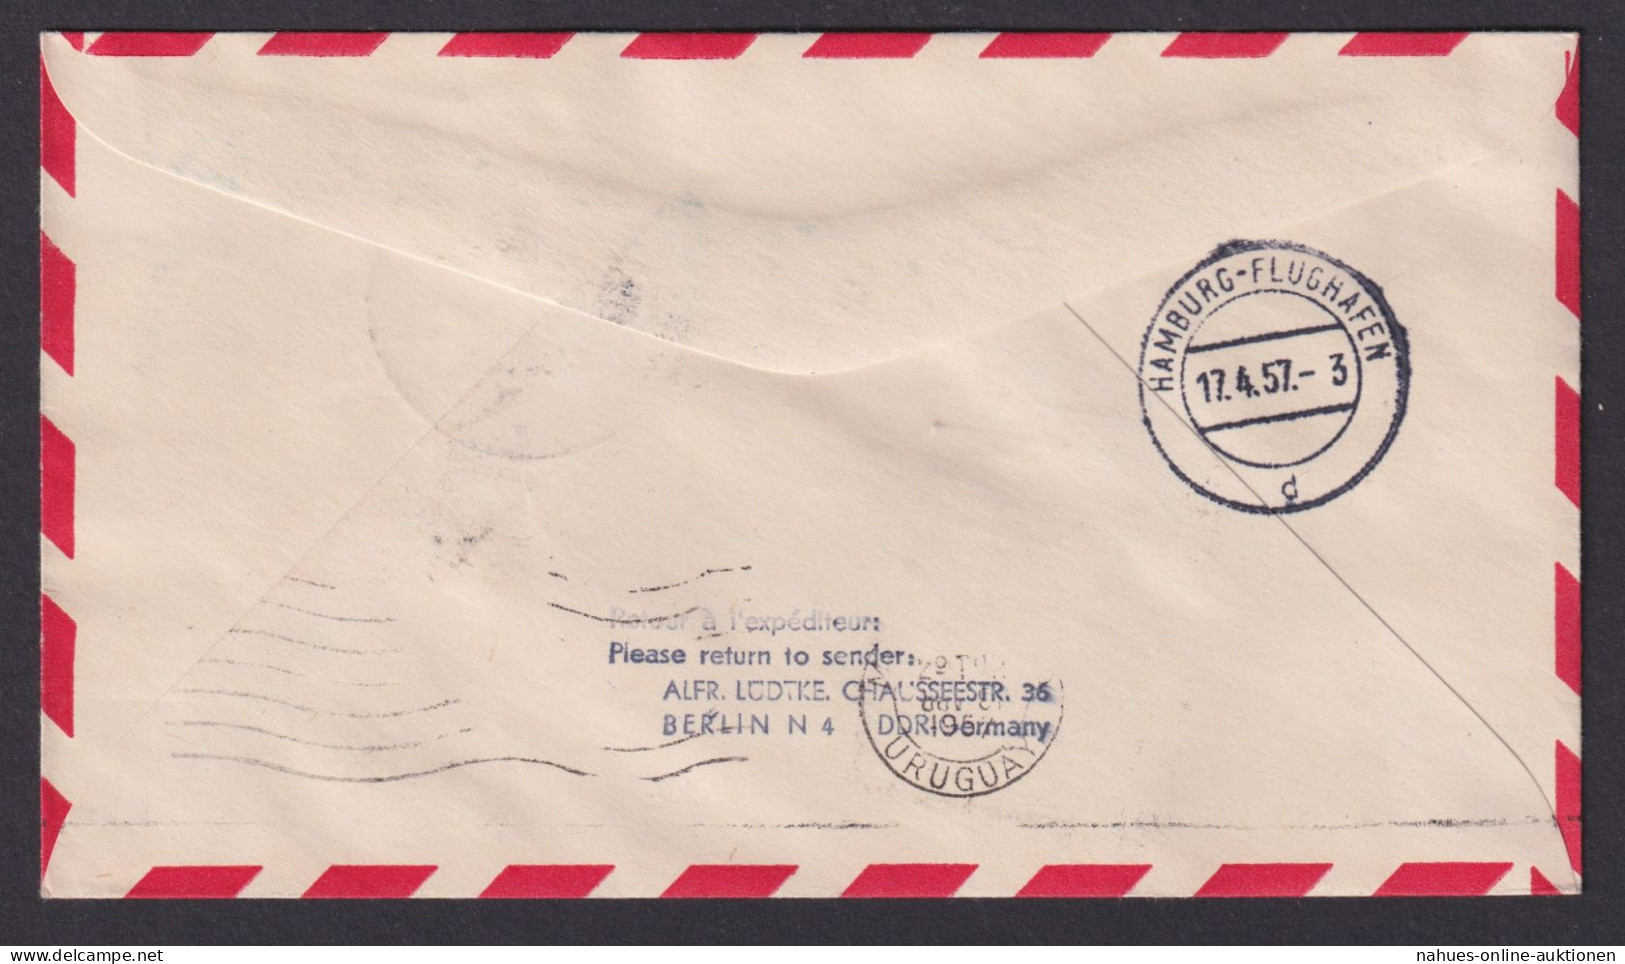 Flugpost Brief Air Mail Lufthansa Erstflug Via Hamburg DDR Montevideo Uruguay - Covers & Documents